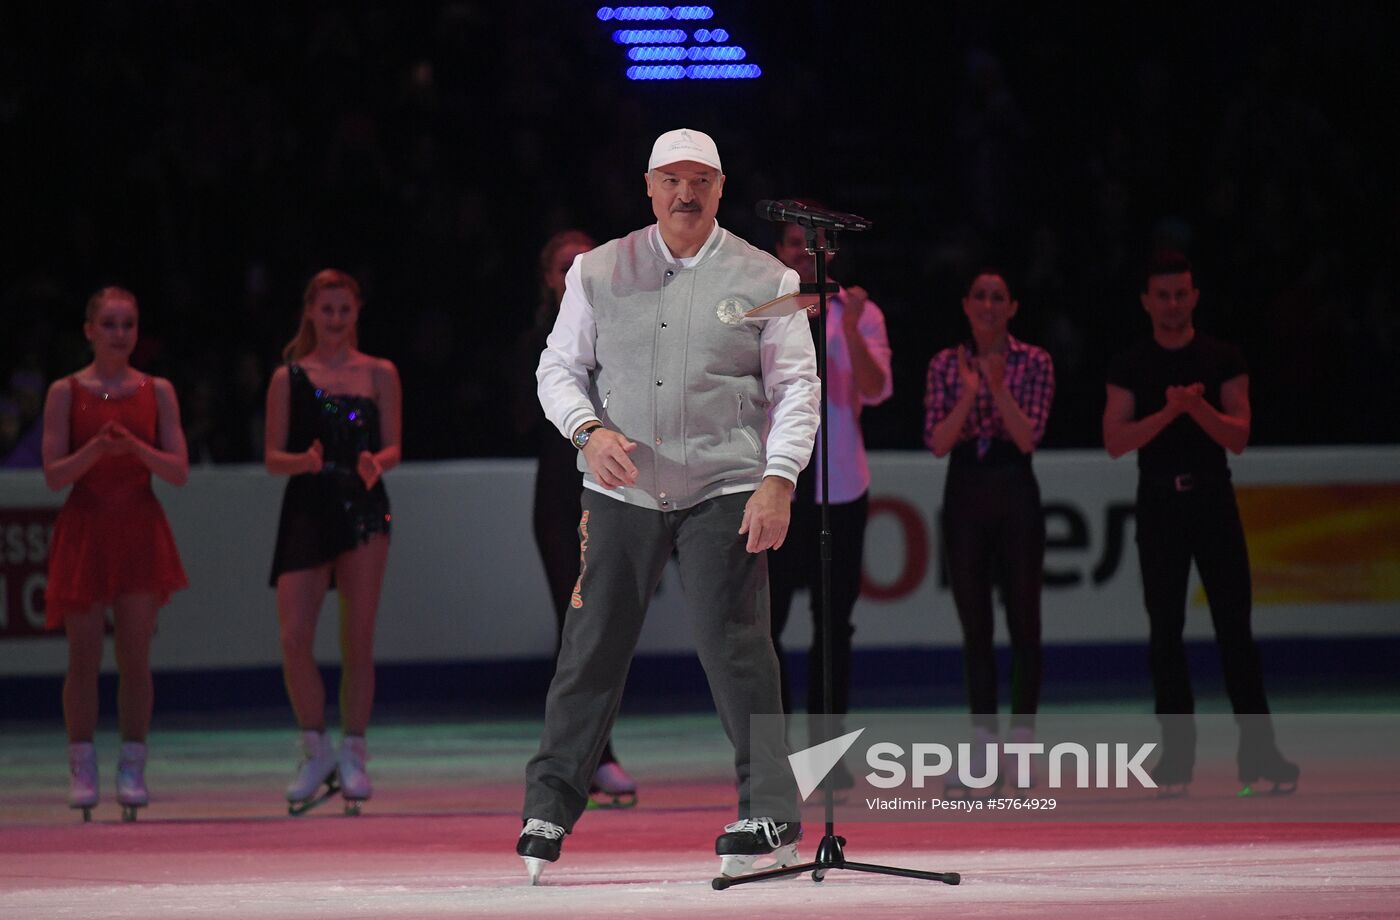 Belarus European Figure Skating Championships Exhibition Gala 